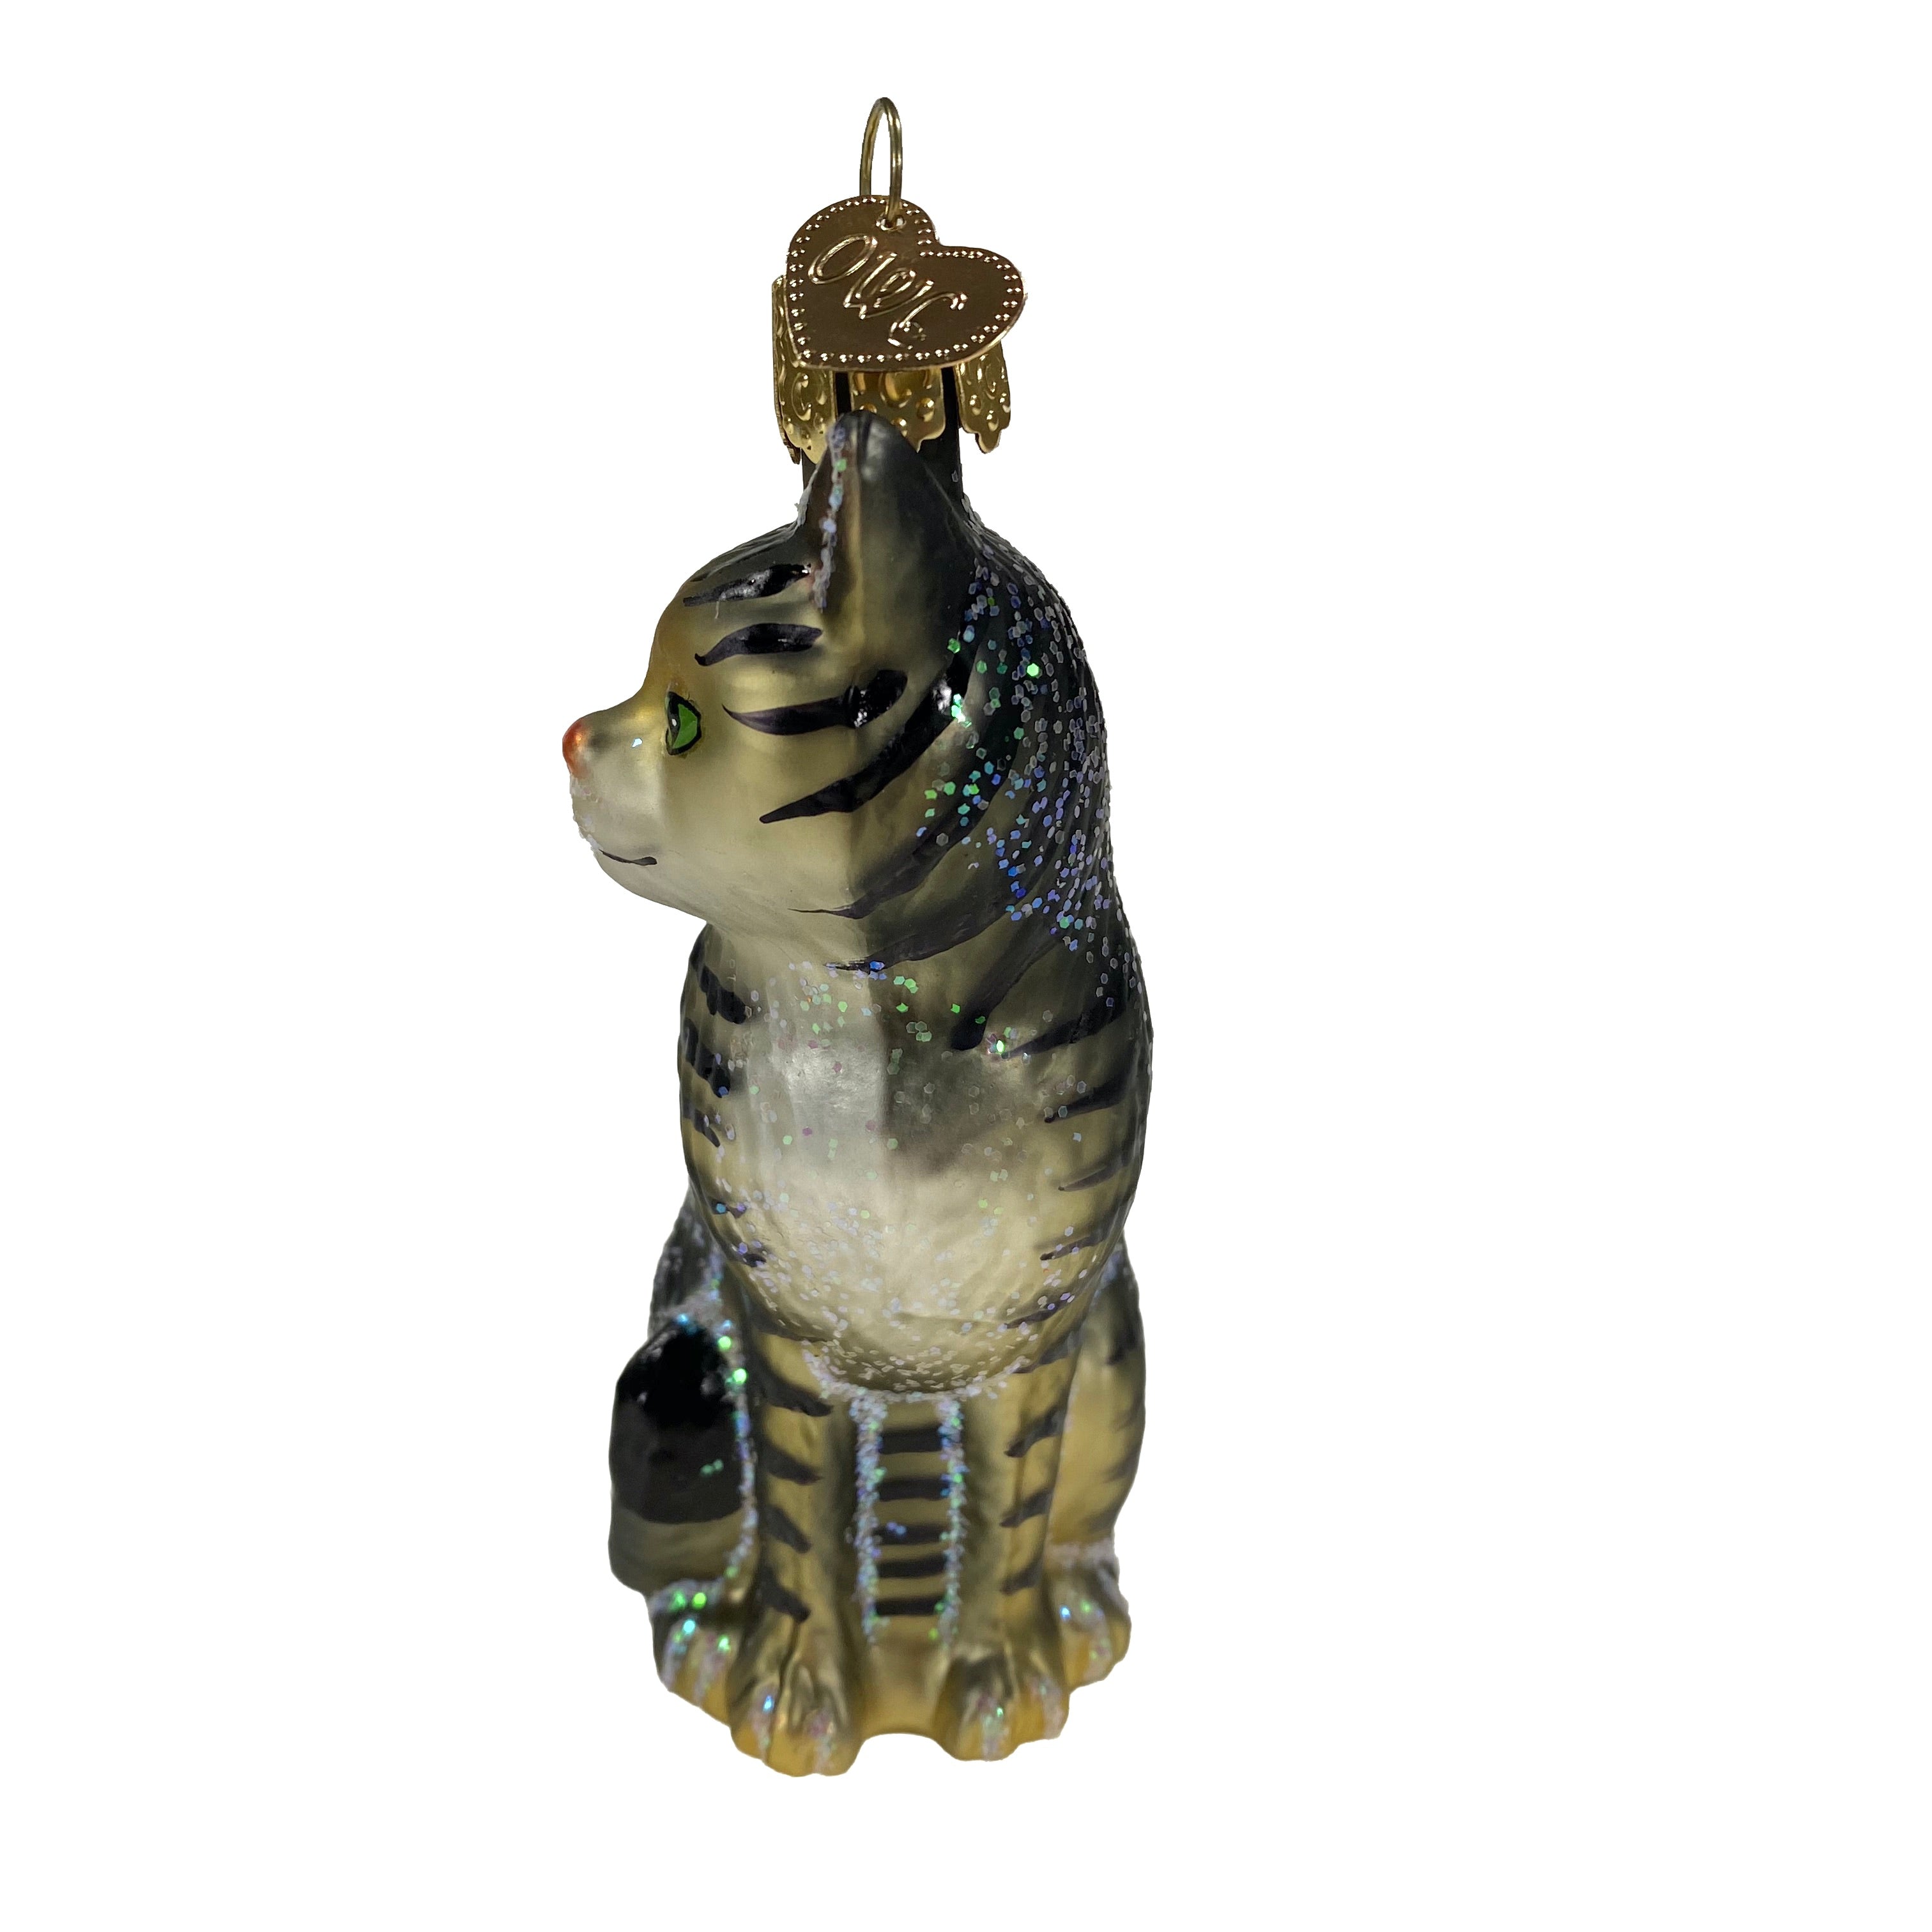 Old World Christmas - Grey Tabby Cat Ornament    